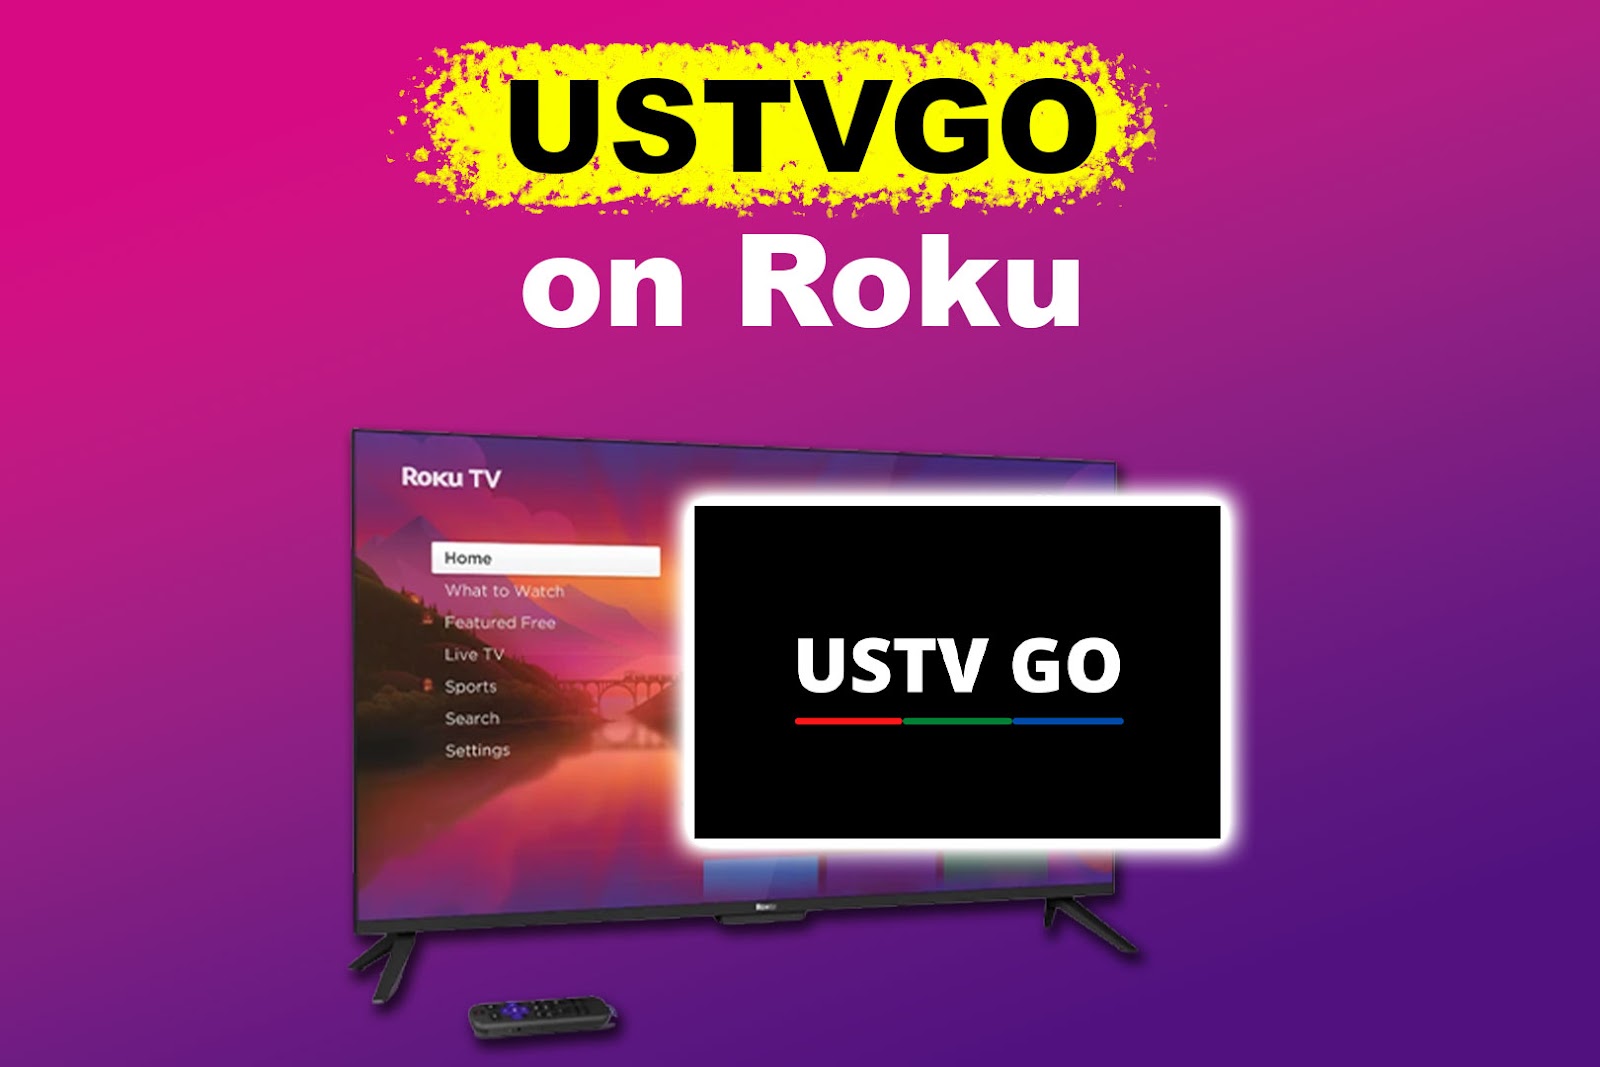 USTVGO on Roku [Easy Ways to Watch!]